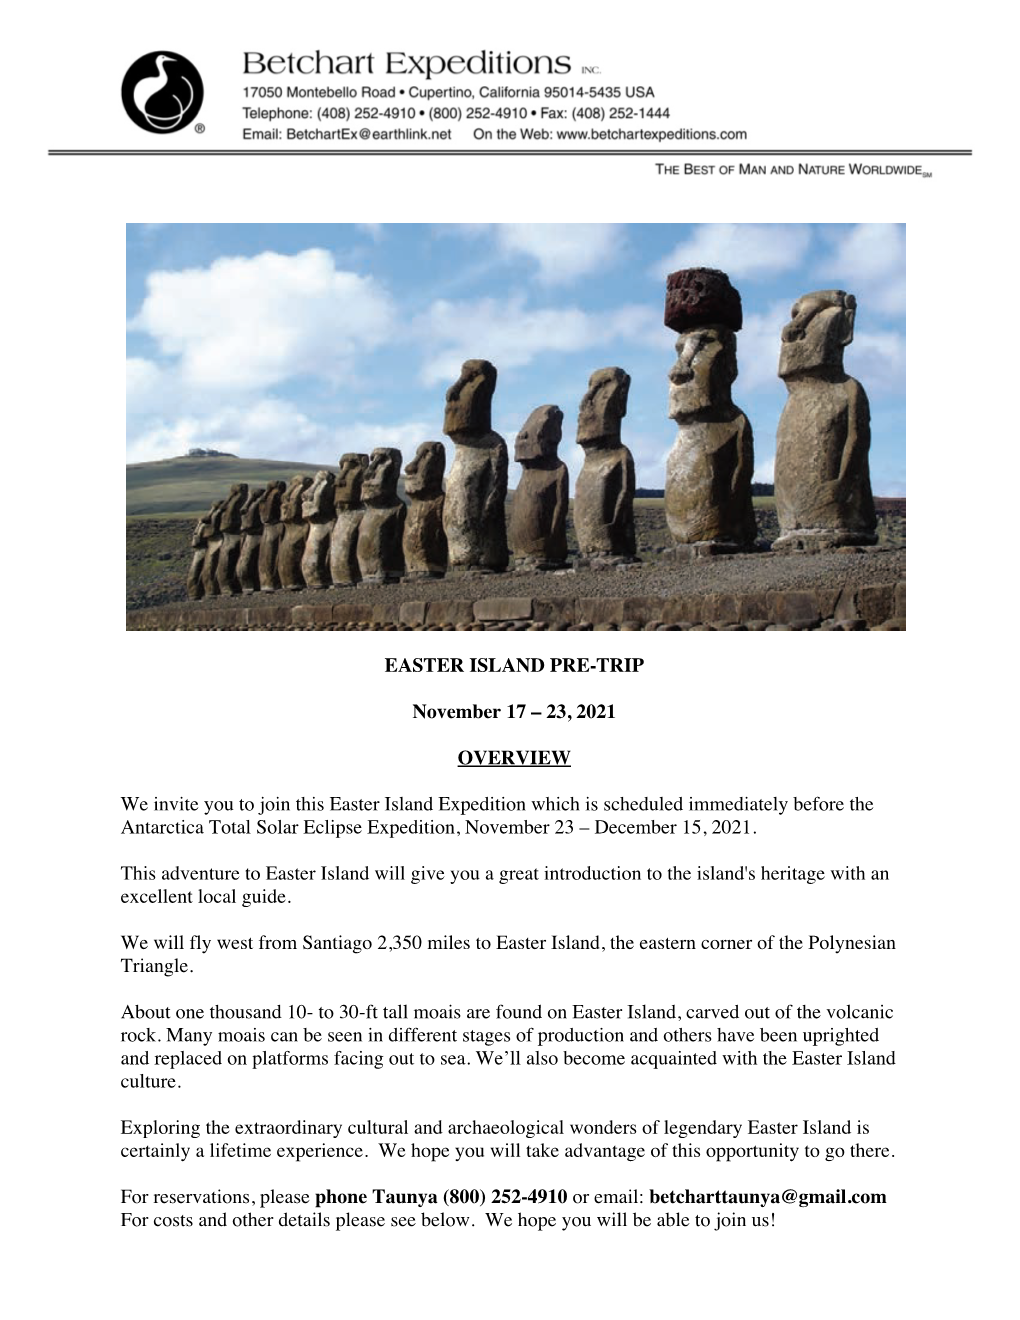 Easter Island Pre-Trip